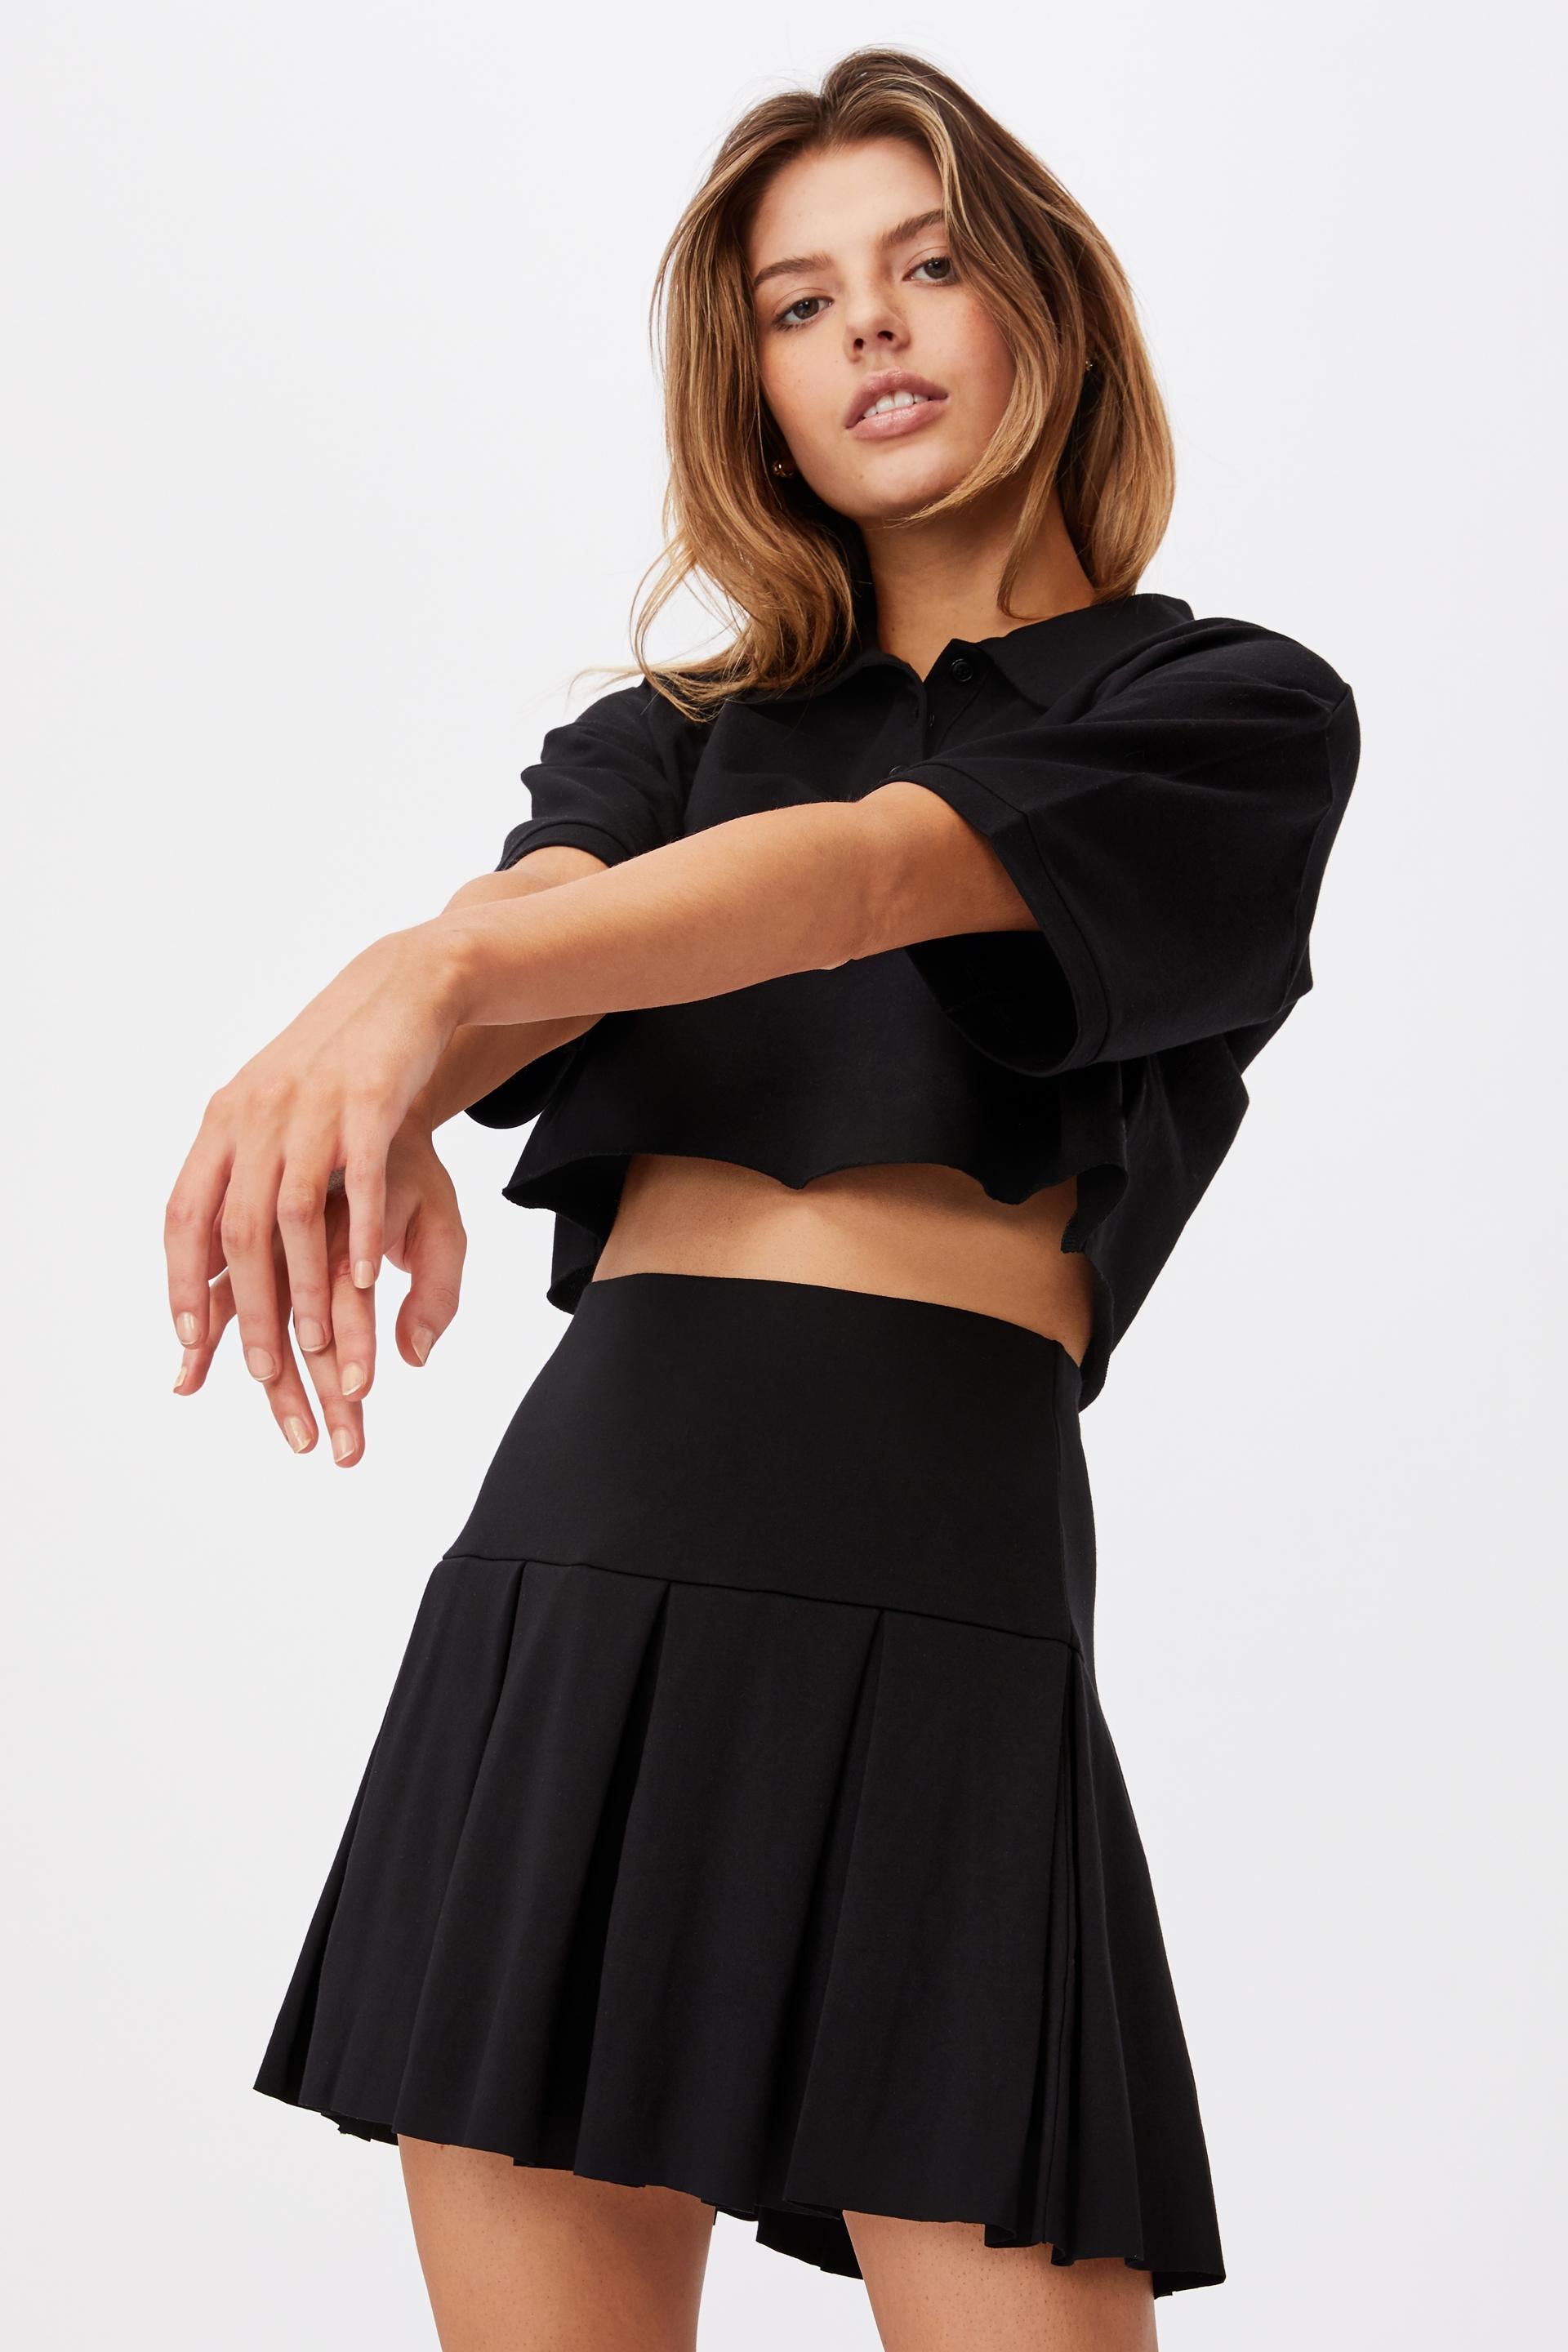 Tennis skirt - black. Factorie Skirts | Superbalist.com